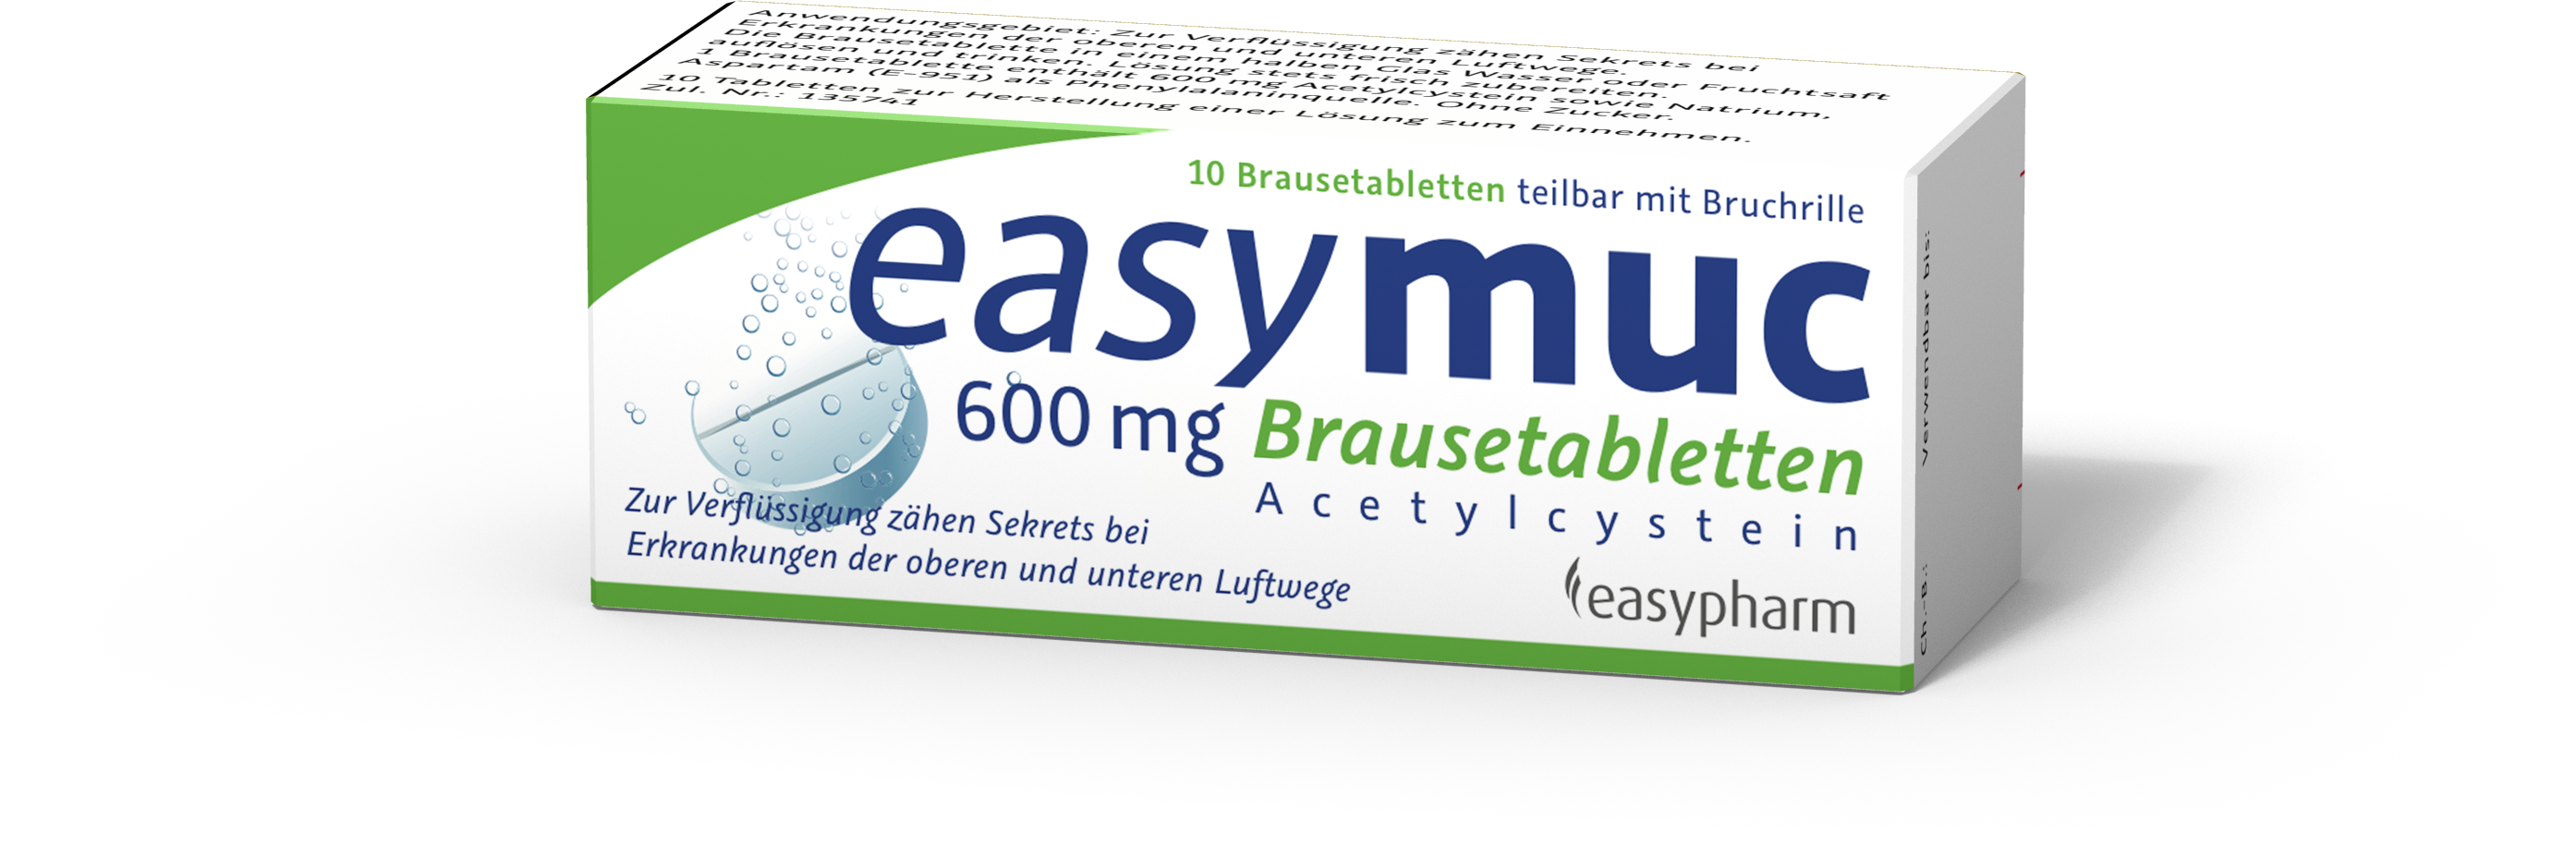 easymuc 600 mg - Brausetabletten